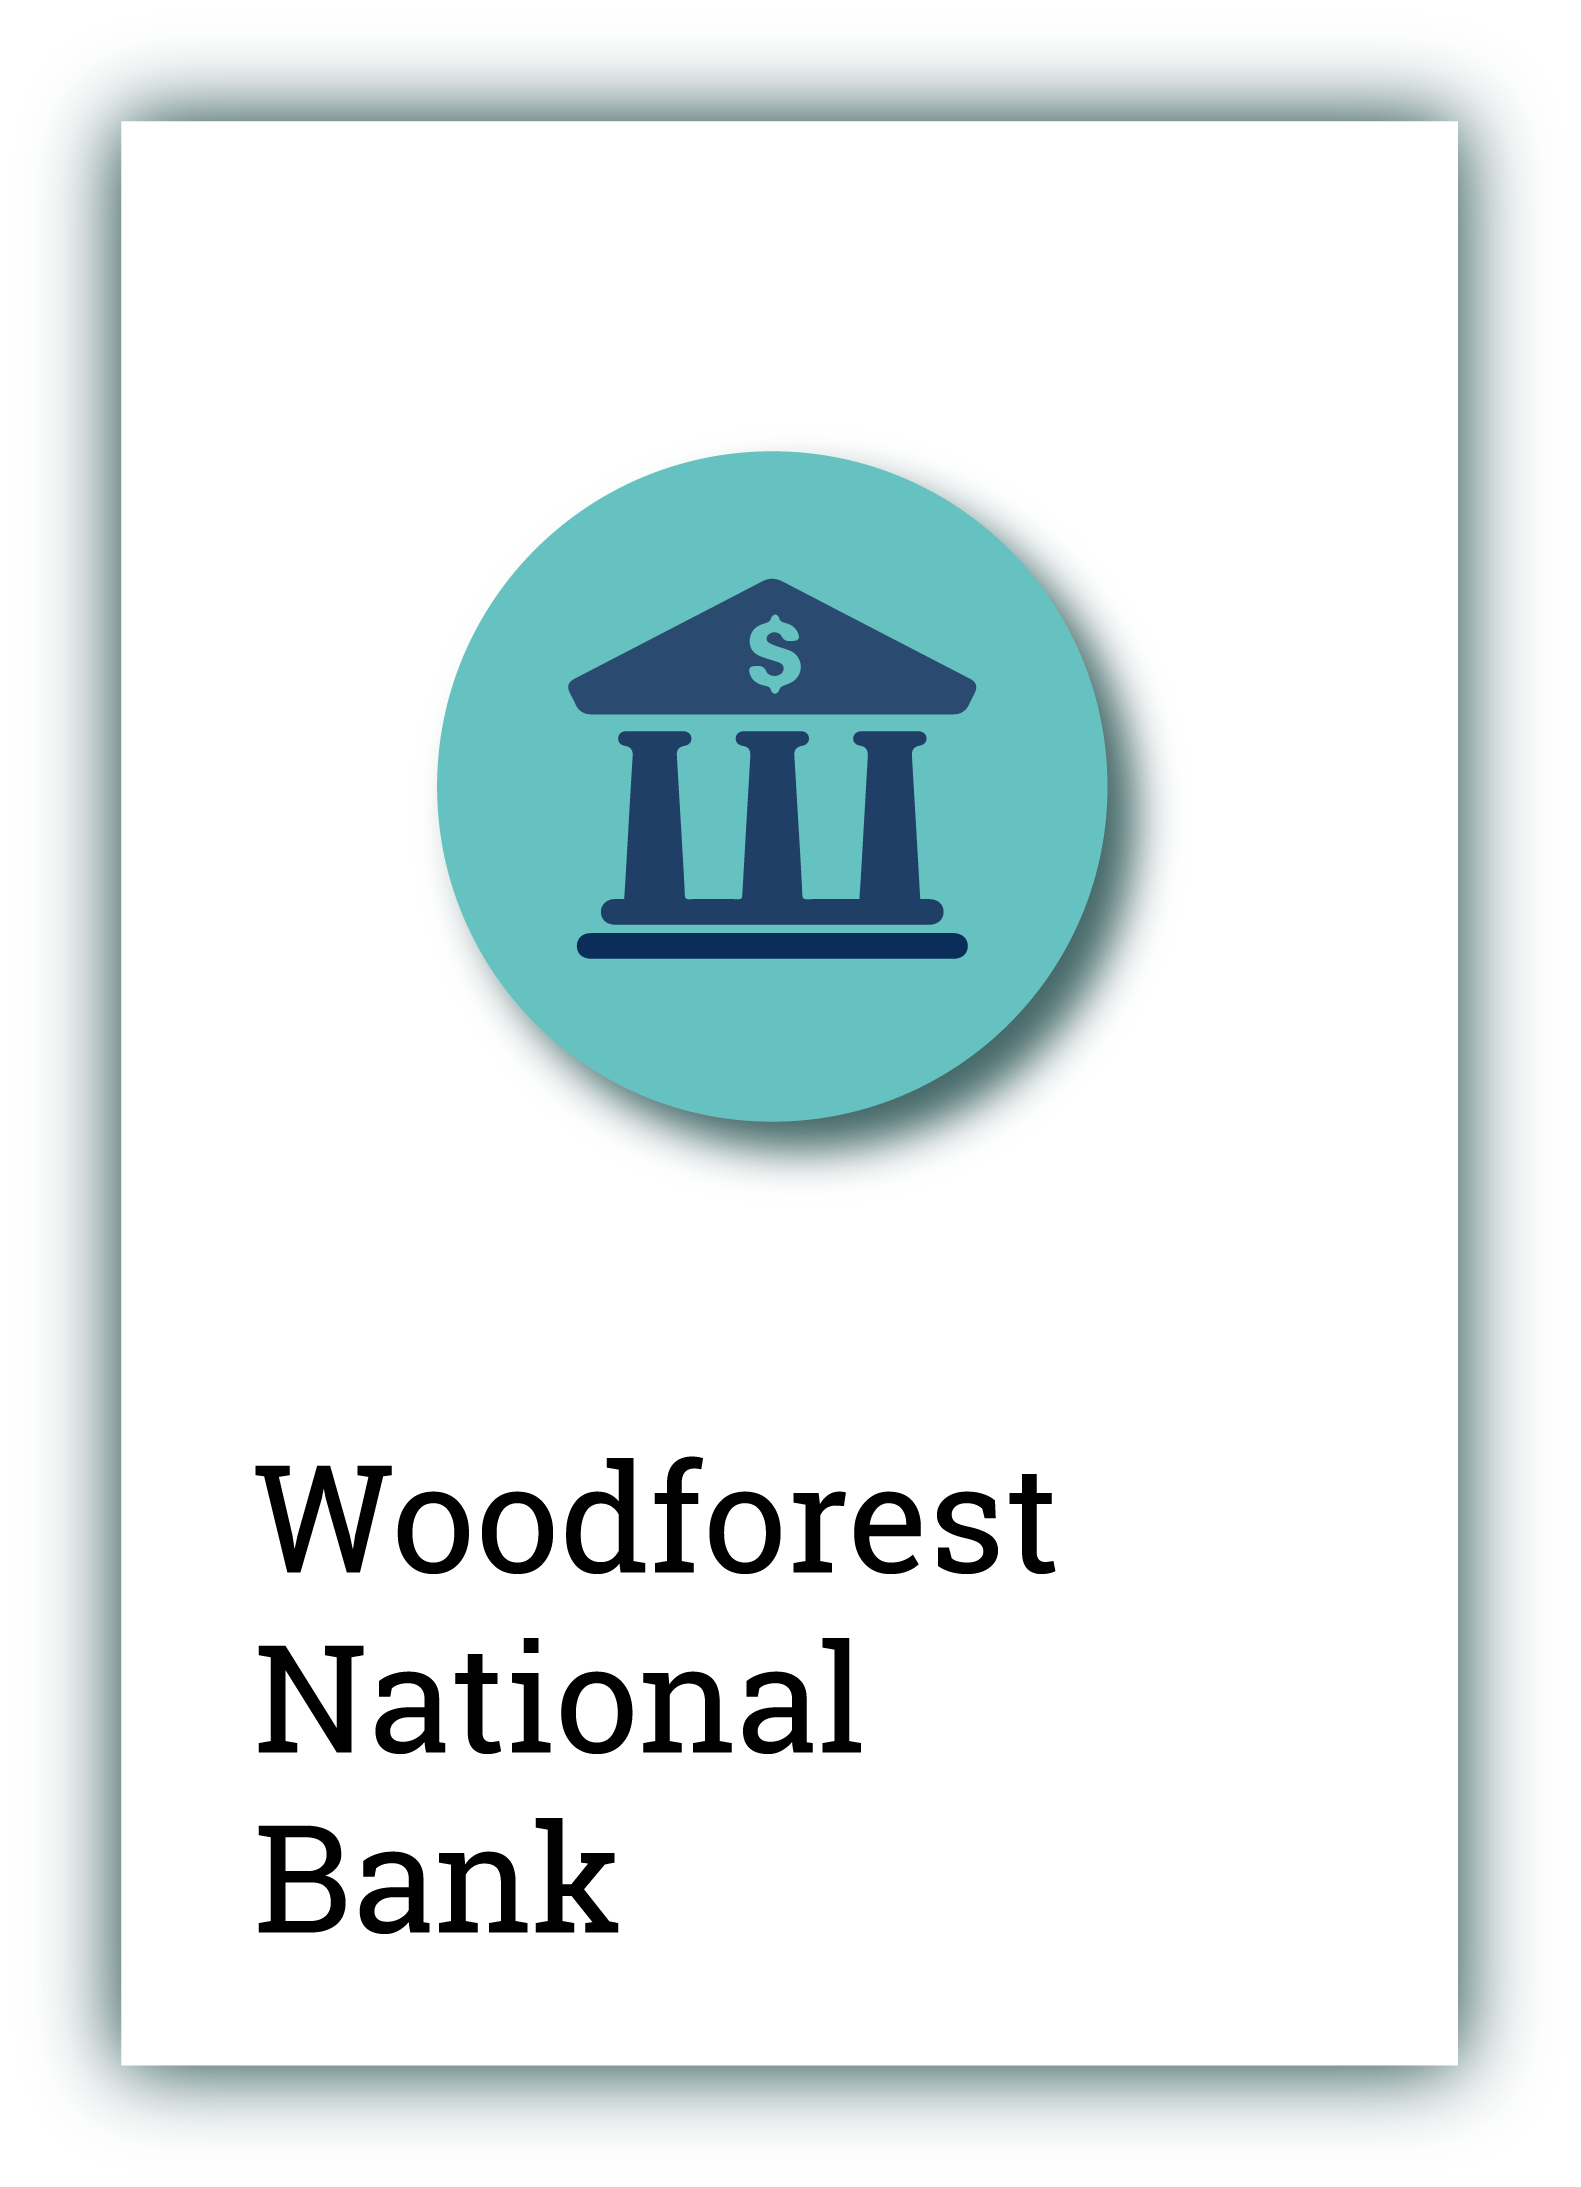 Woodforest National Bank 2